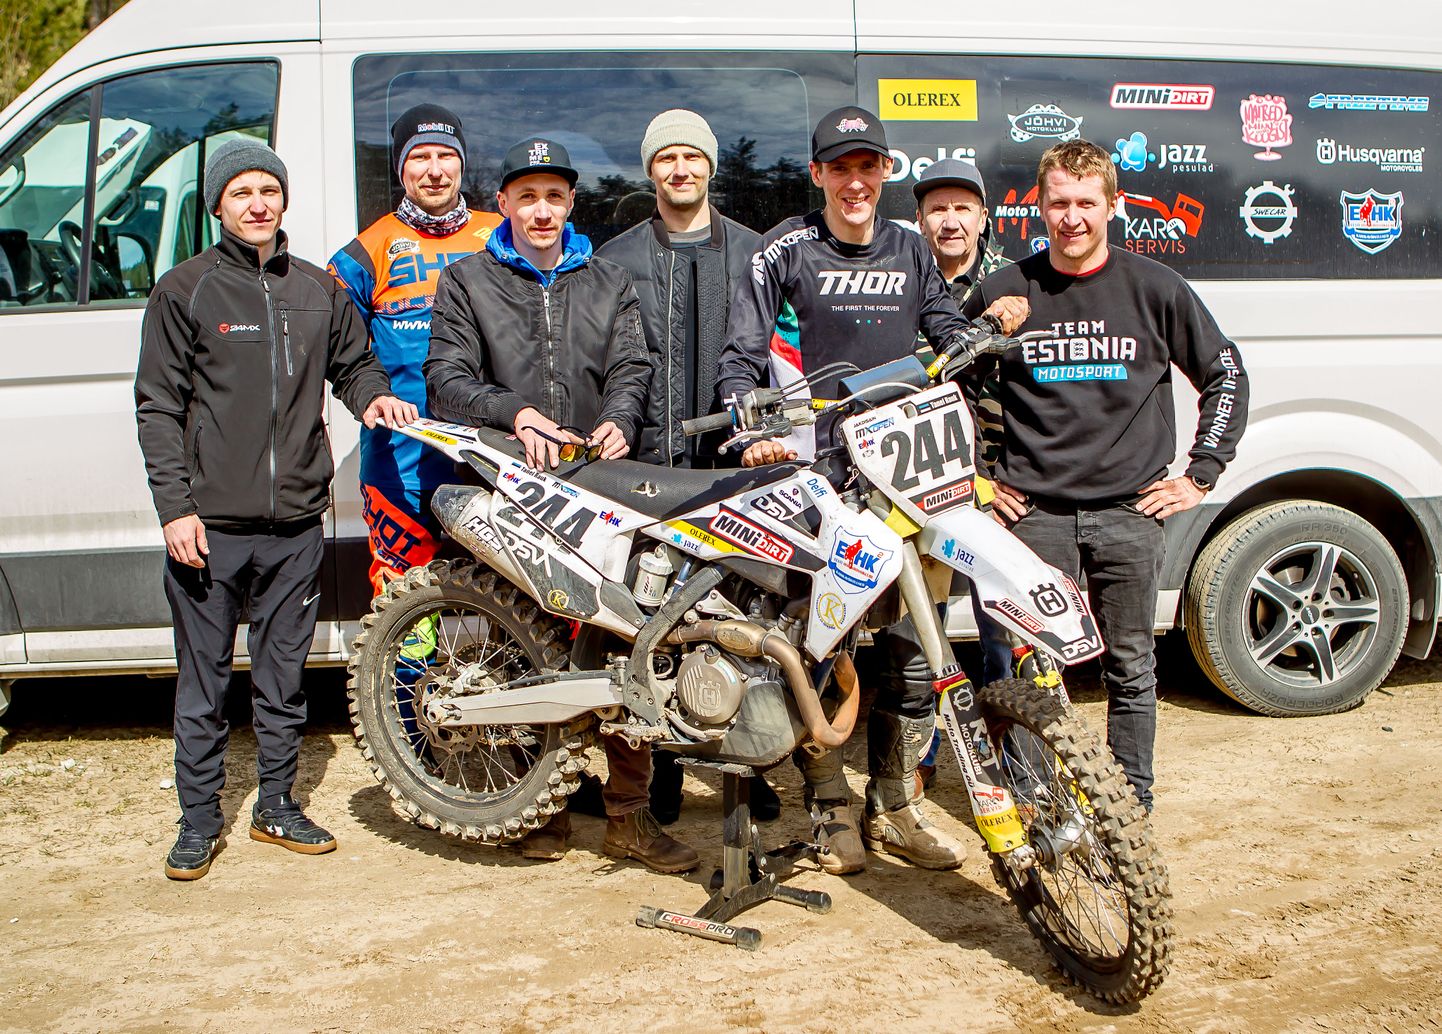 Команда Йыхвиского мотоклуба начала сезон на хорошем ходу.